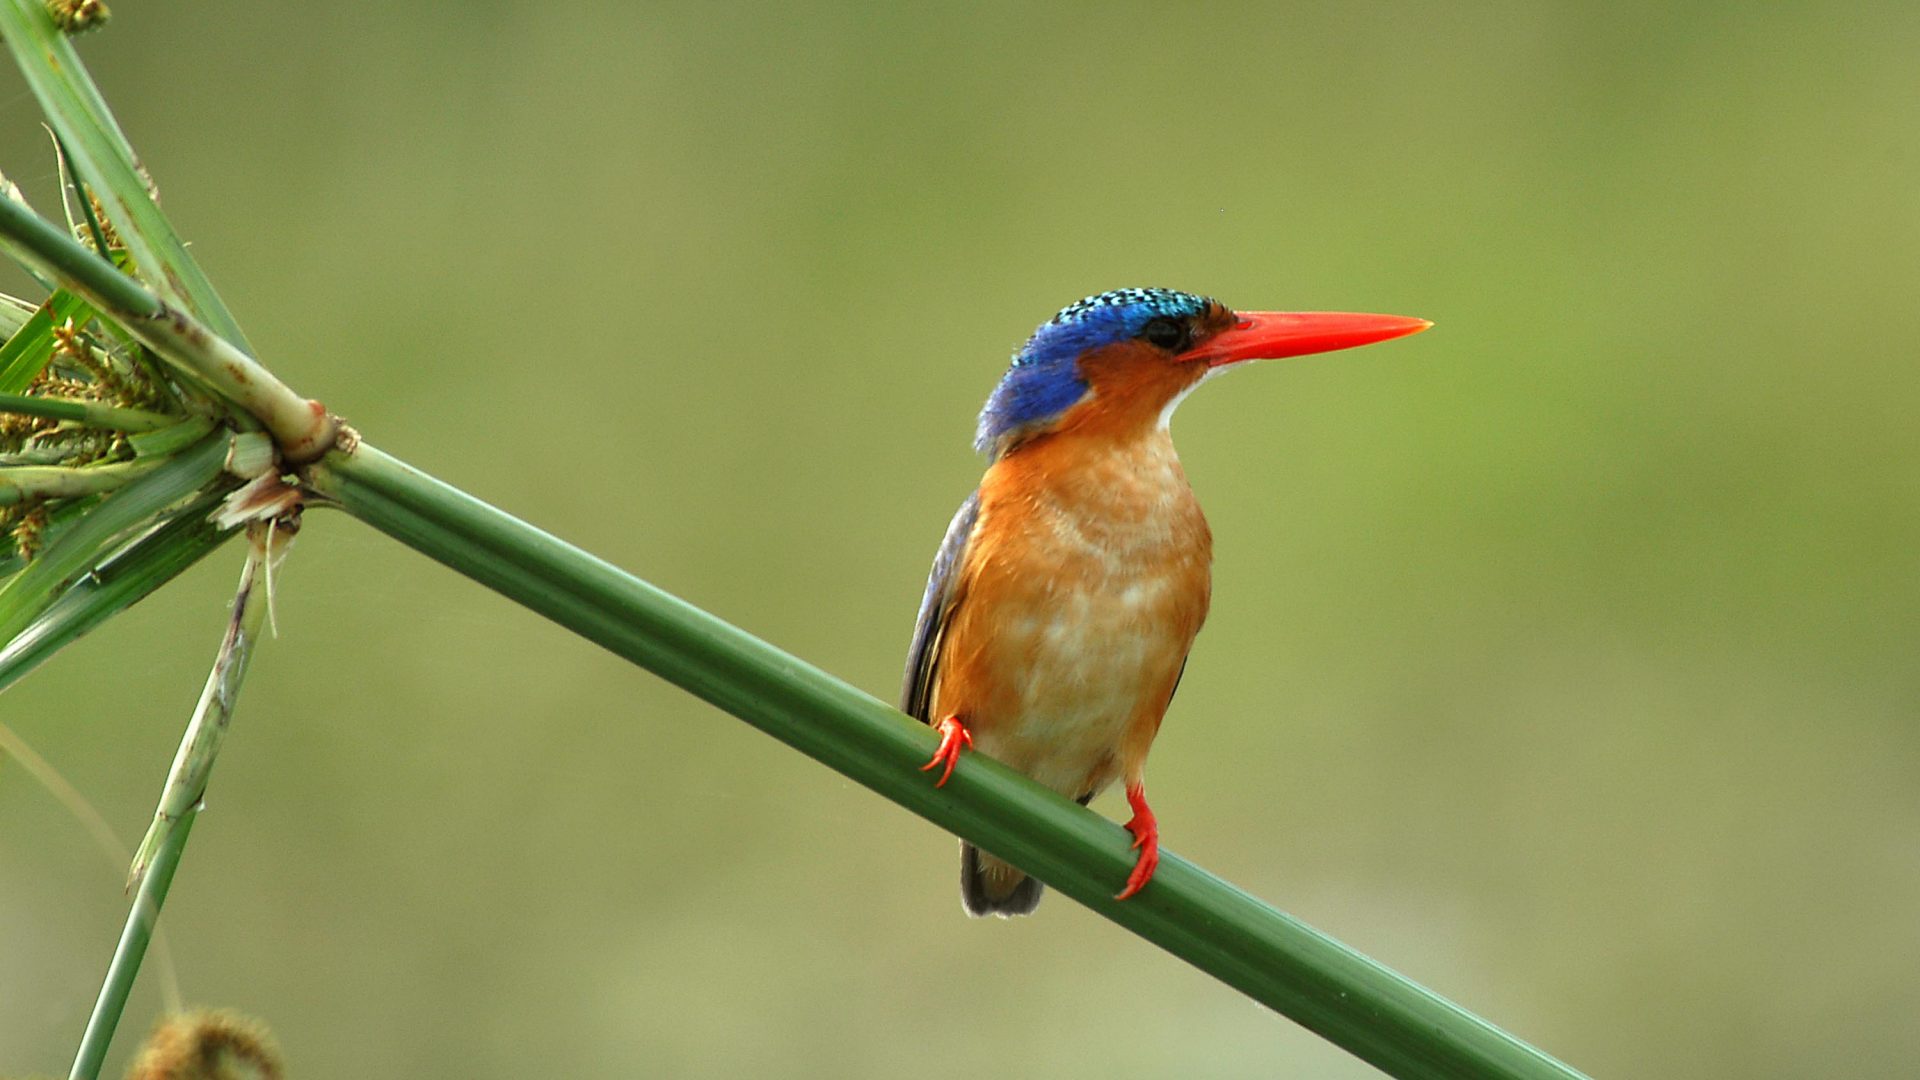 A bird in Liwonde National Park, Malawi.